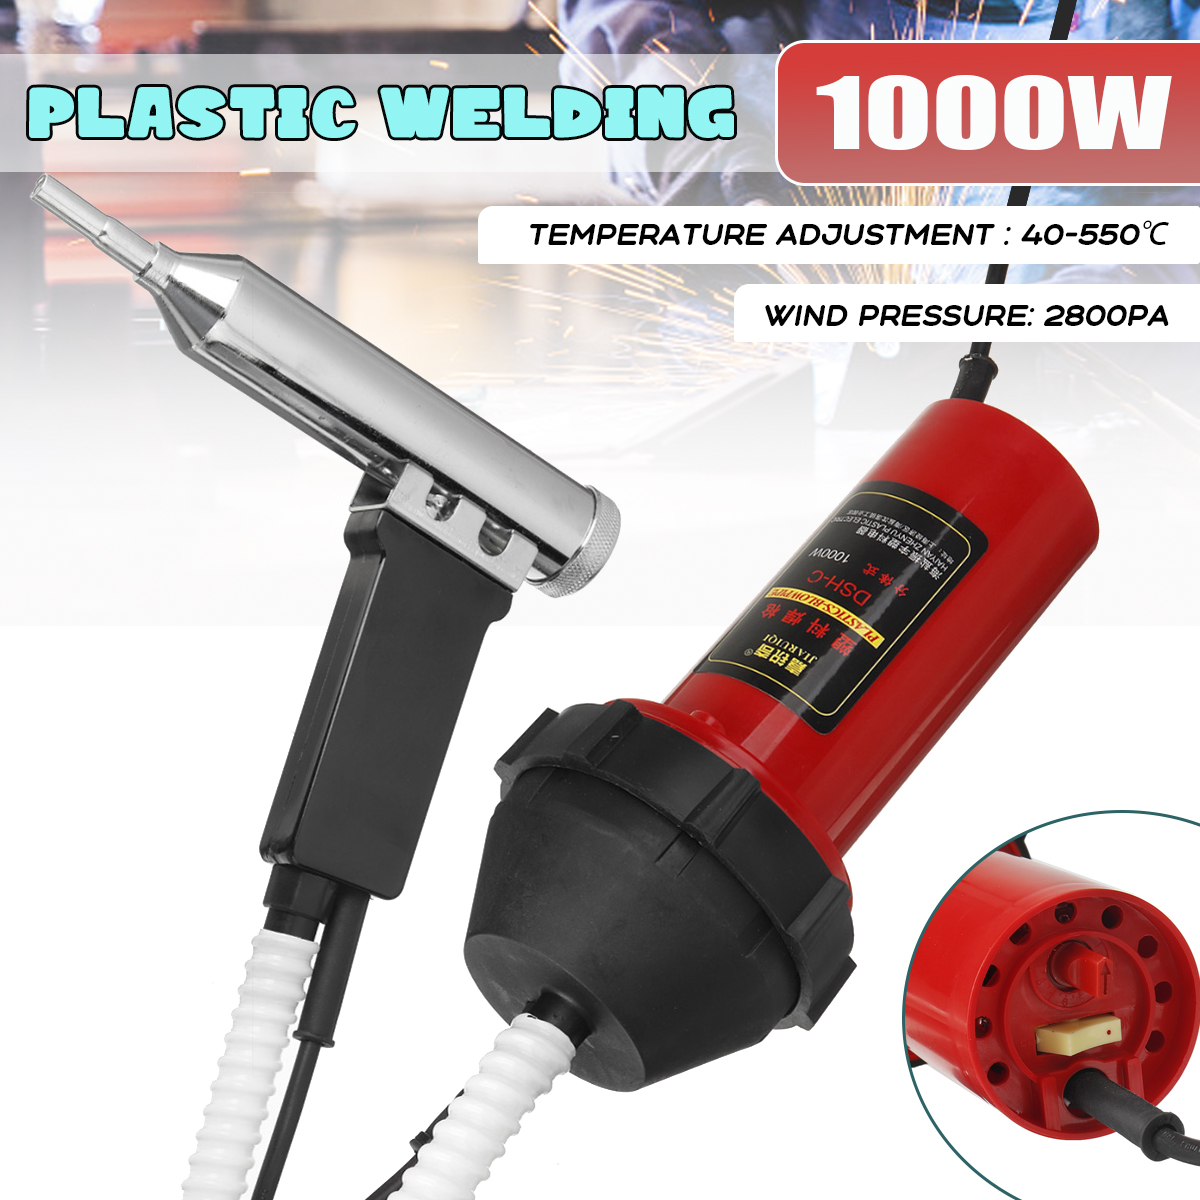 1000W-Plastic-Welding-Hot-Air-Torch-Machine-Car-Bumper-Adjustable-Temperature-1848559-3